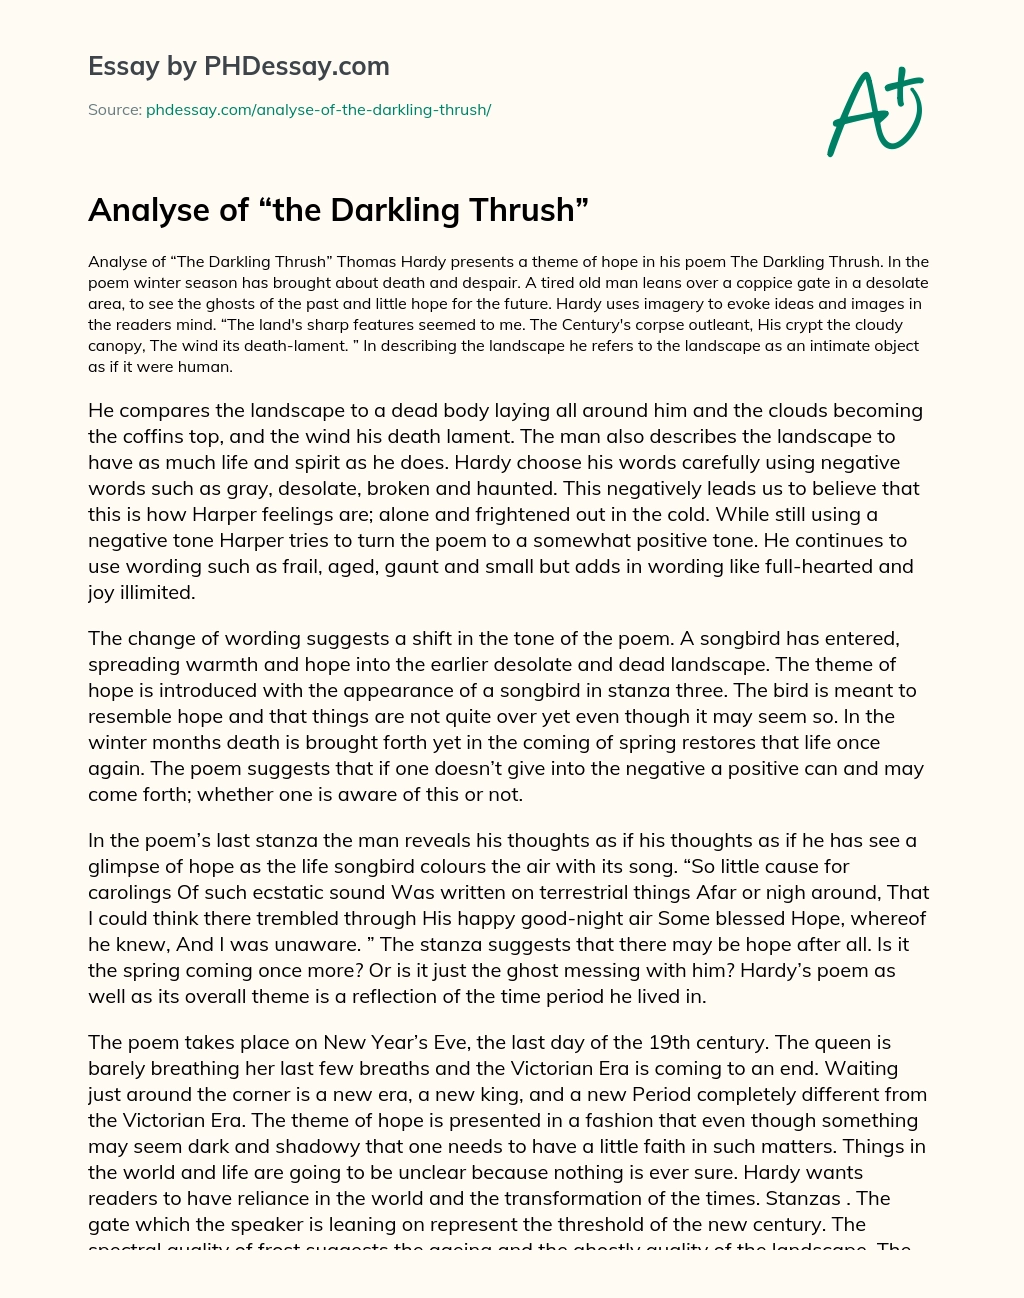 Analyse of “the Darkling Thrush” essay